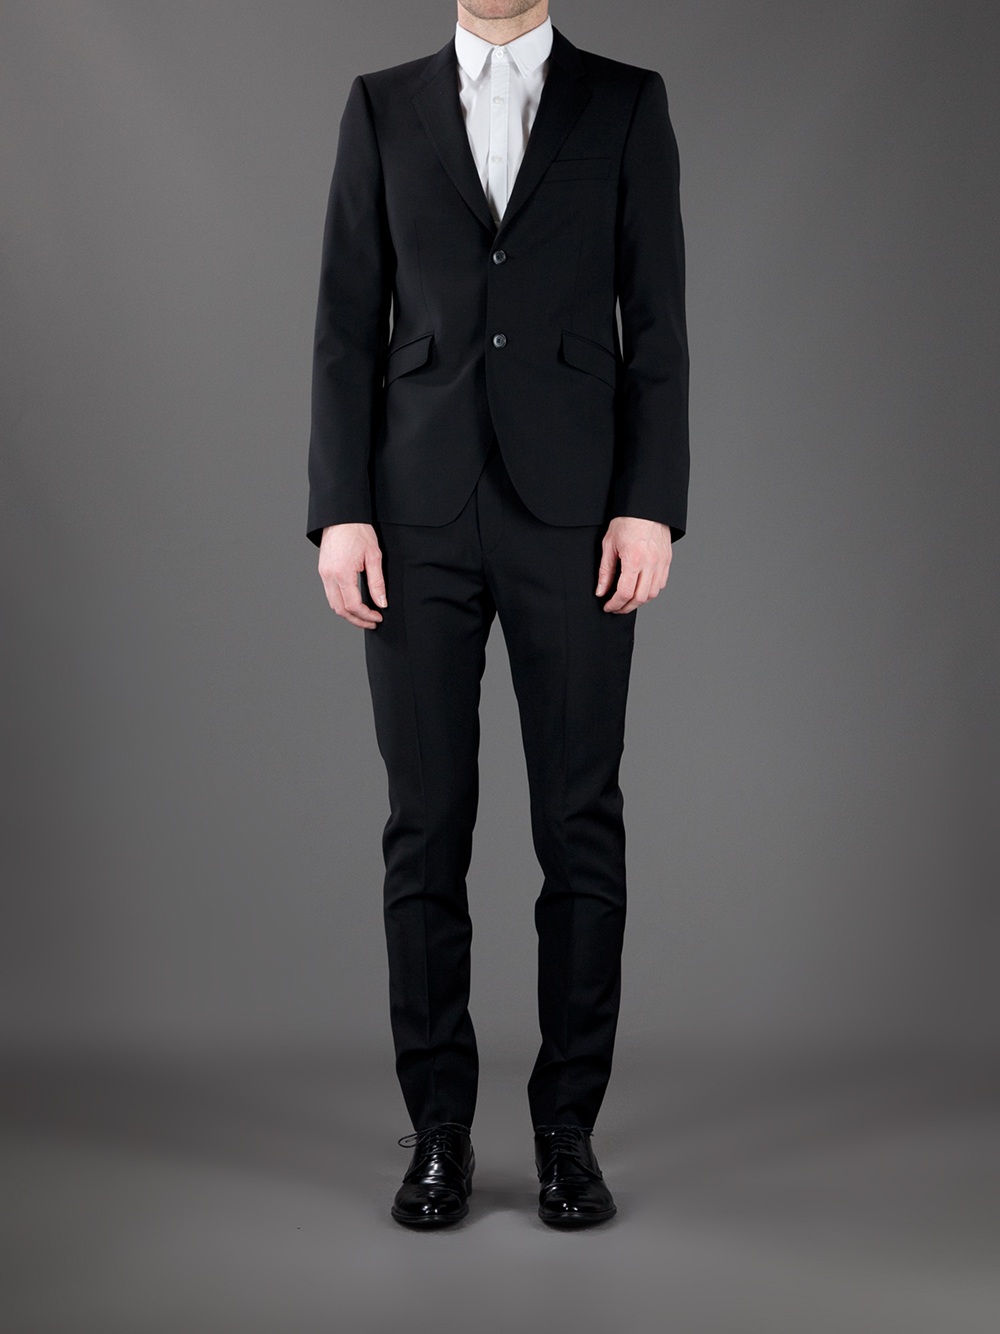 Lyst - Acne Studios Wall Street Blazer in Black for Men